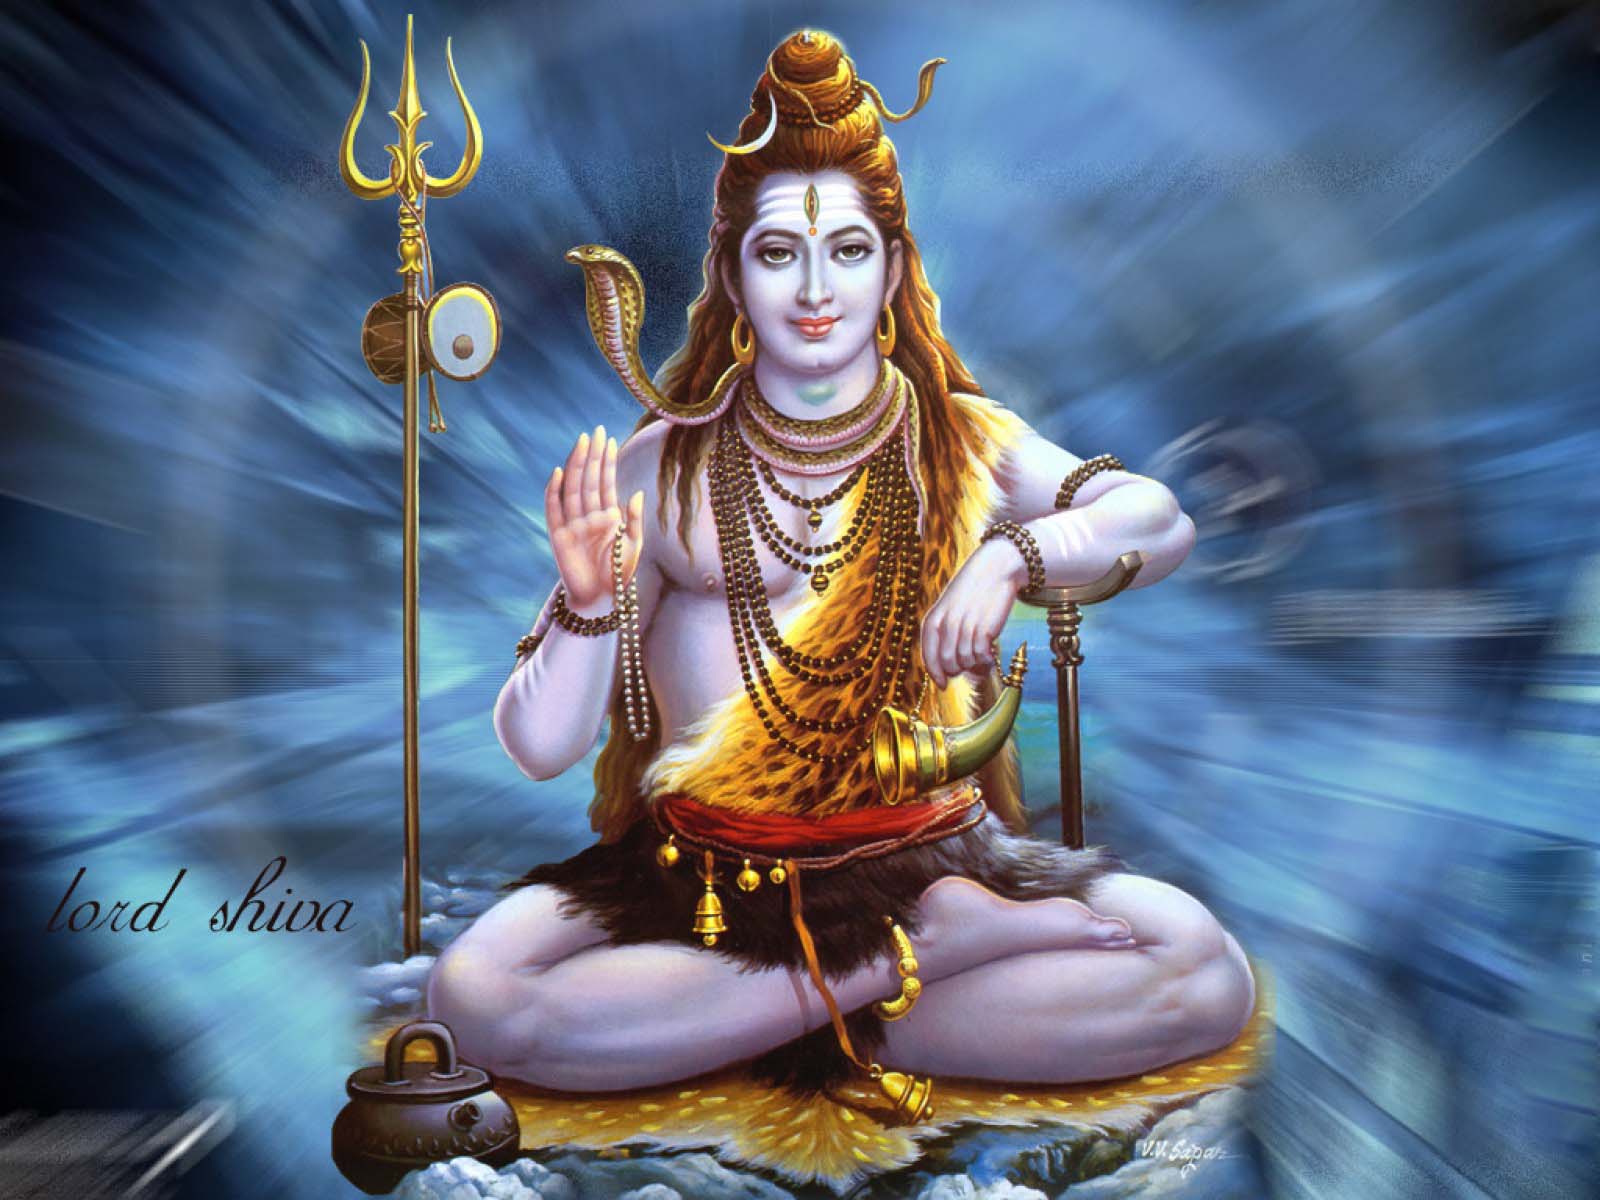 [50+] Lord Shiva Wallpapers HD on WallpaperSafari